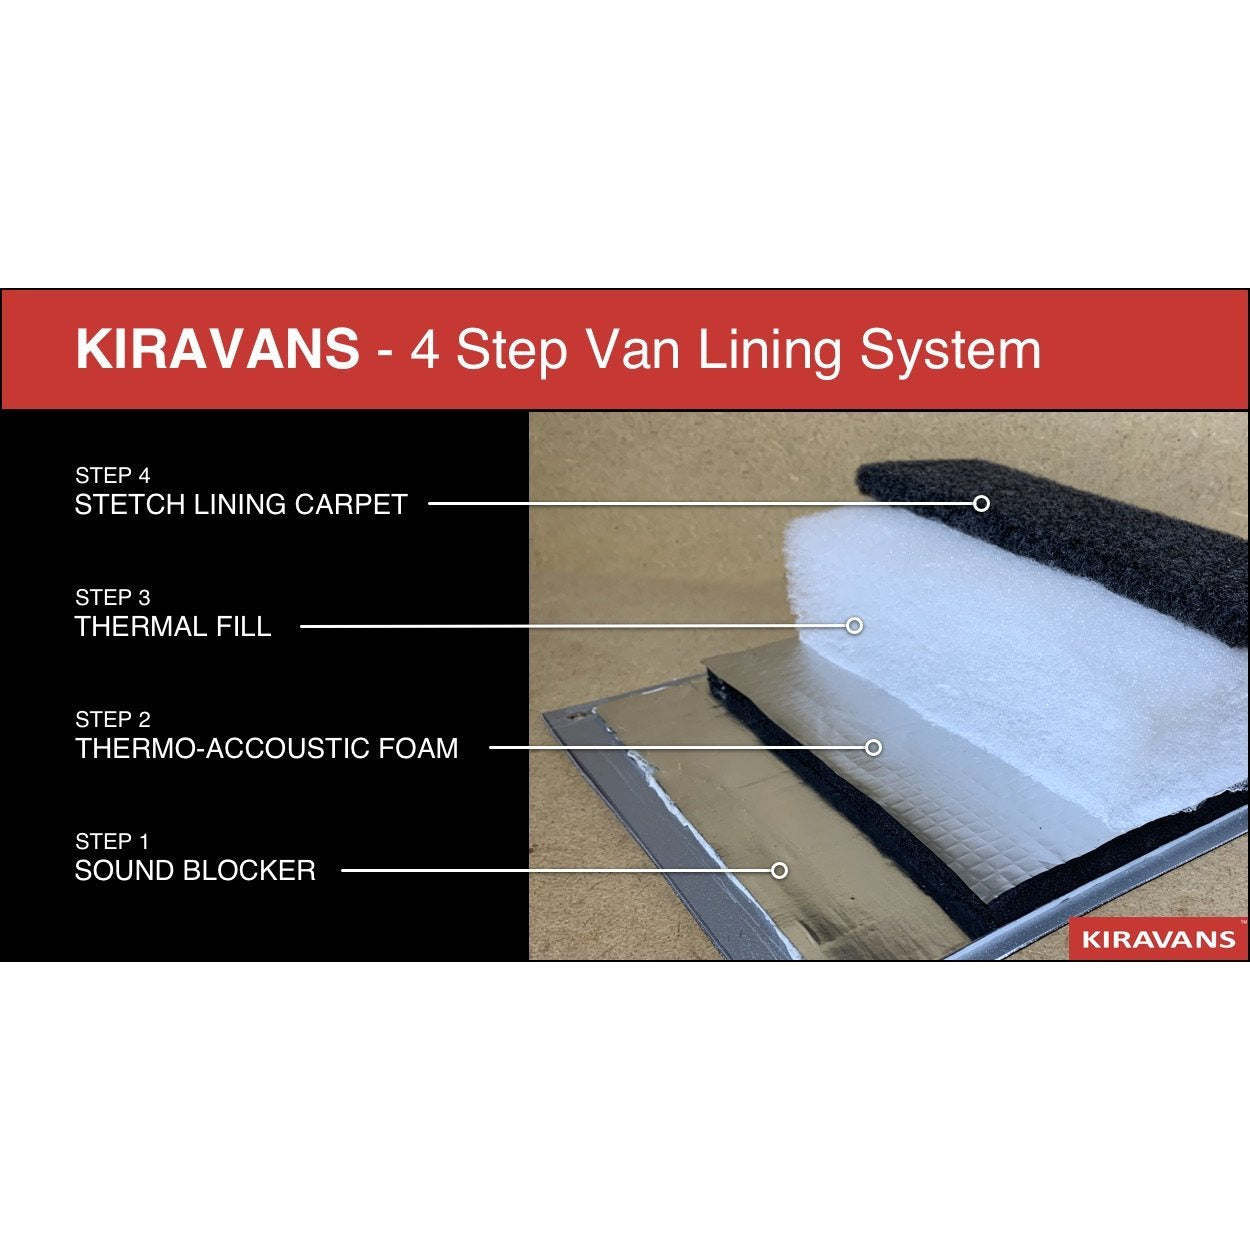 Kiravans Sound Blocker - 2mm Sound Deadening mat Designed by Kiravans 